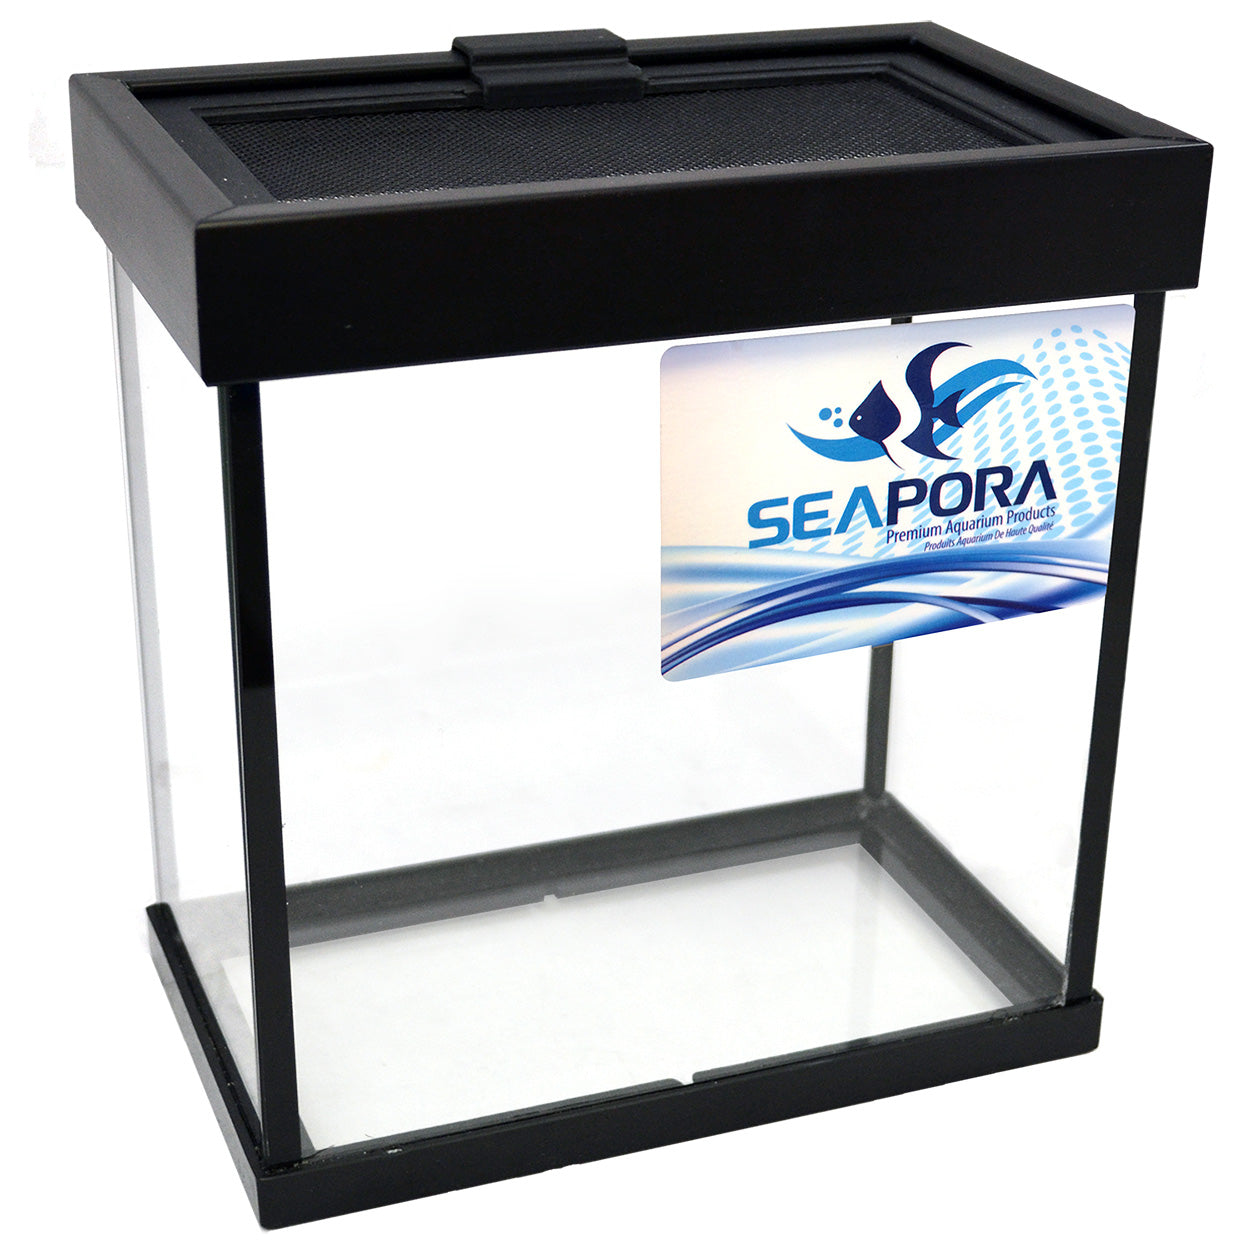 Seapora Standard Aquarium - 90 gallons - 48 x 18 x 24